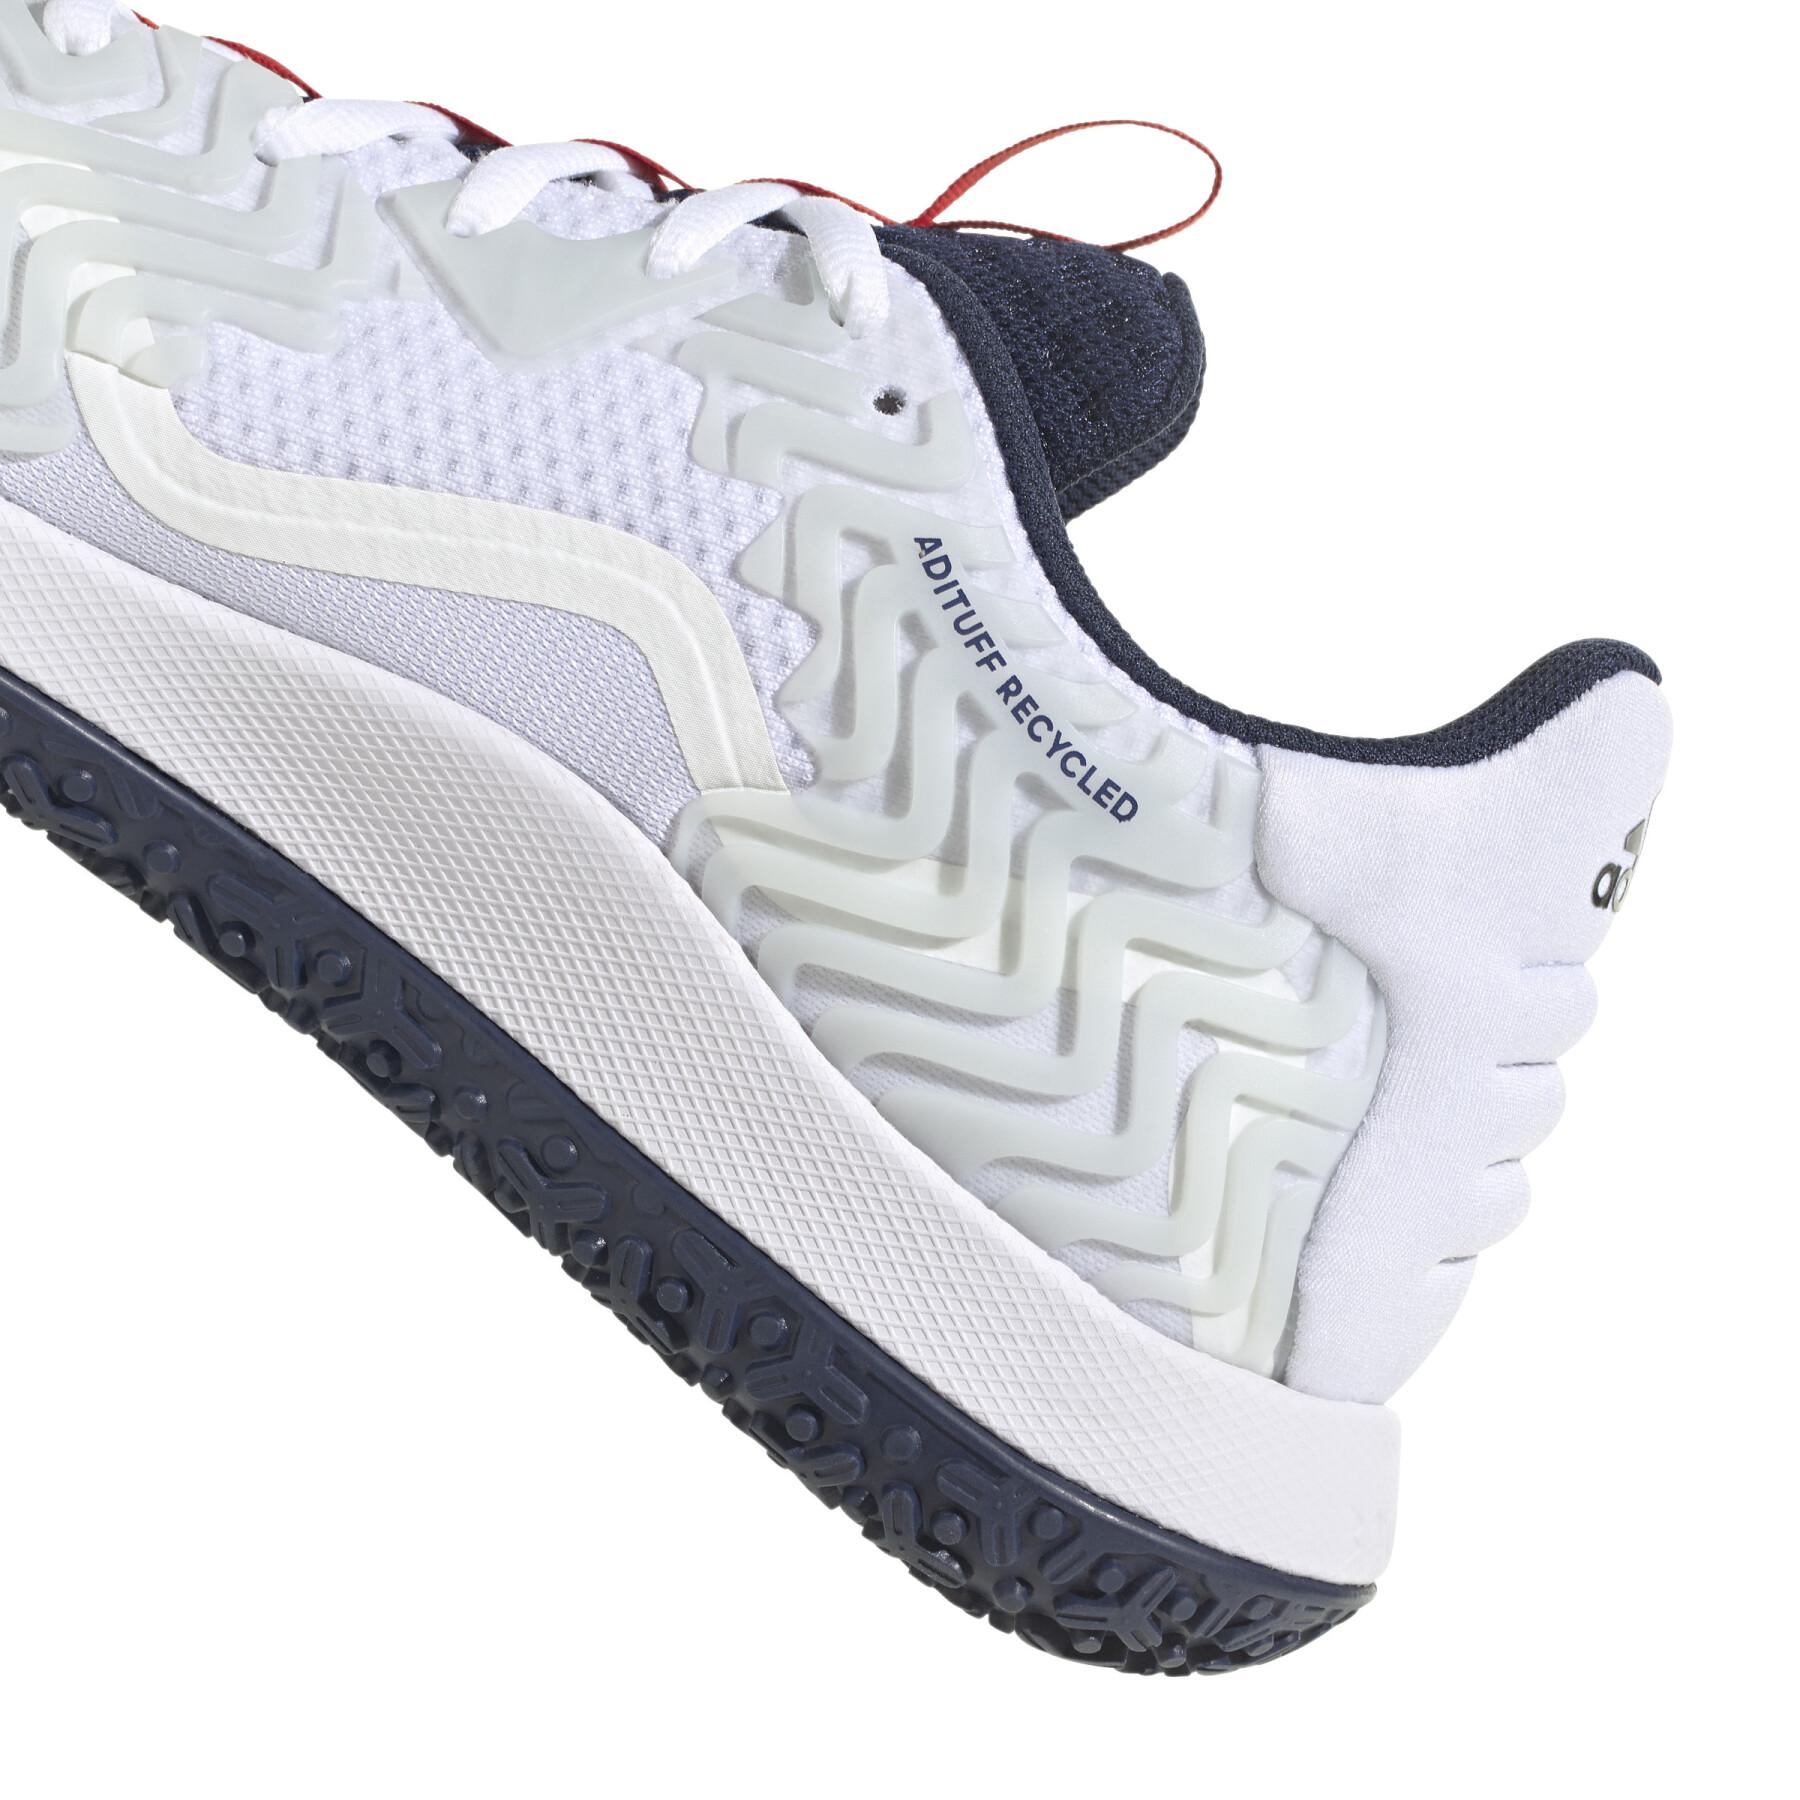 Chaussures de tennis adidas Solematch Control